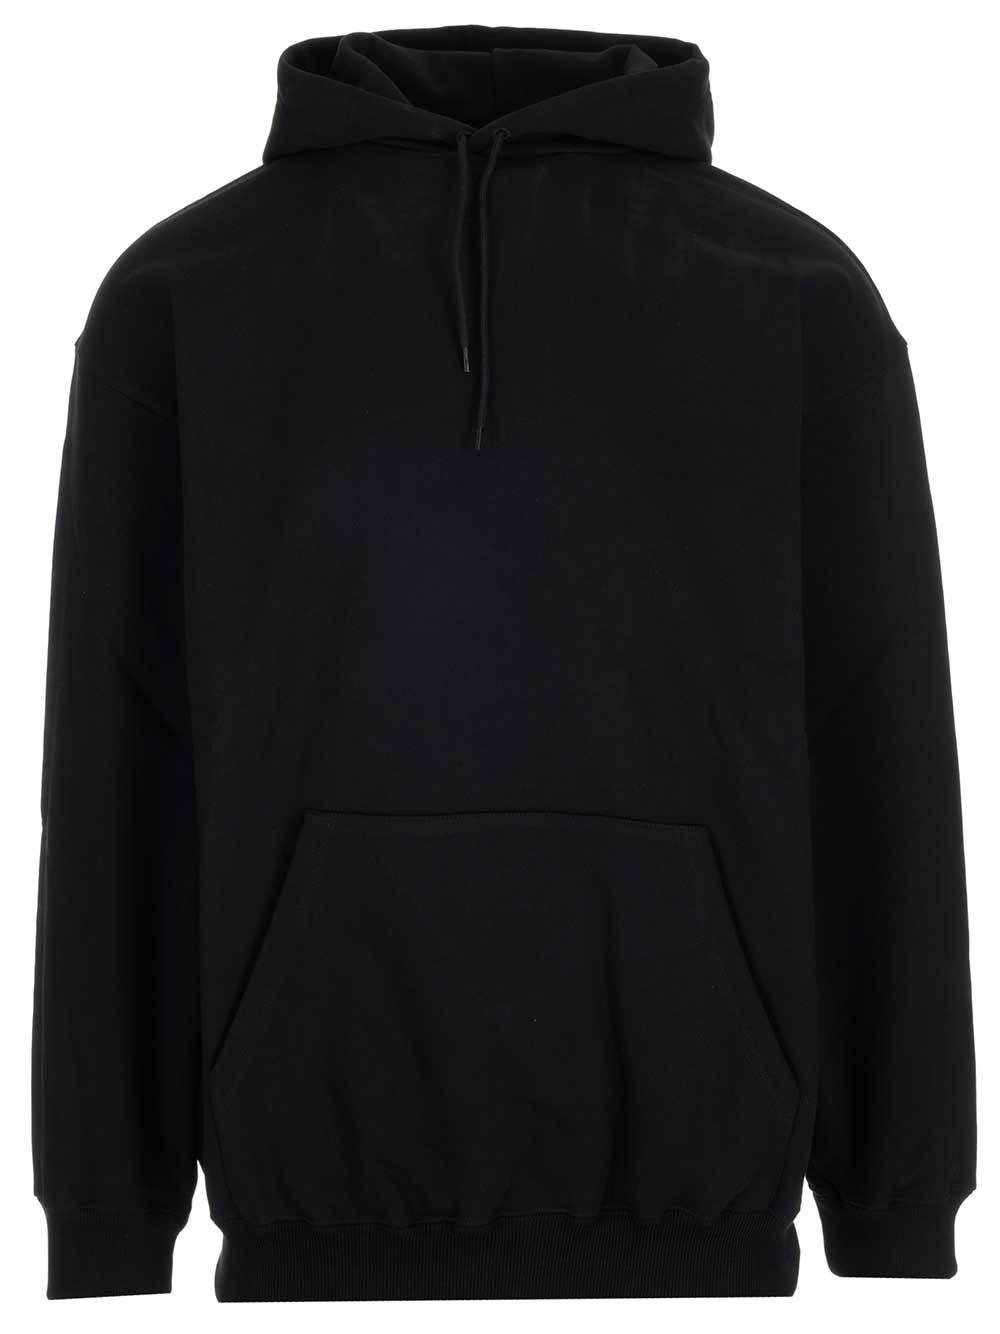 Balenciaga Cotton Back Logo Hoodie in Black for Men - Lyst